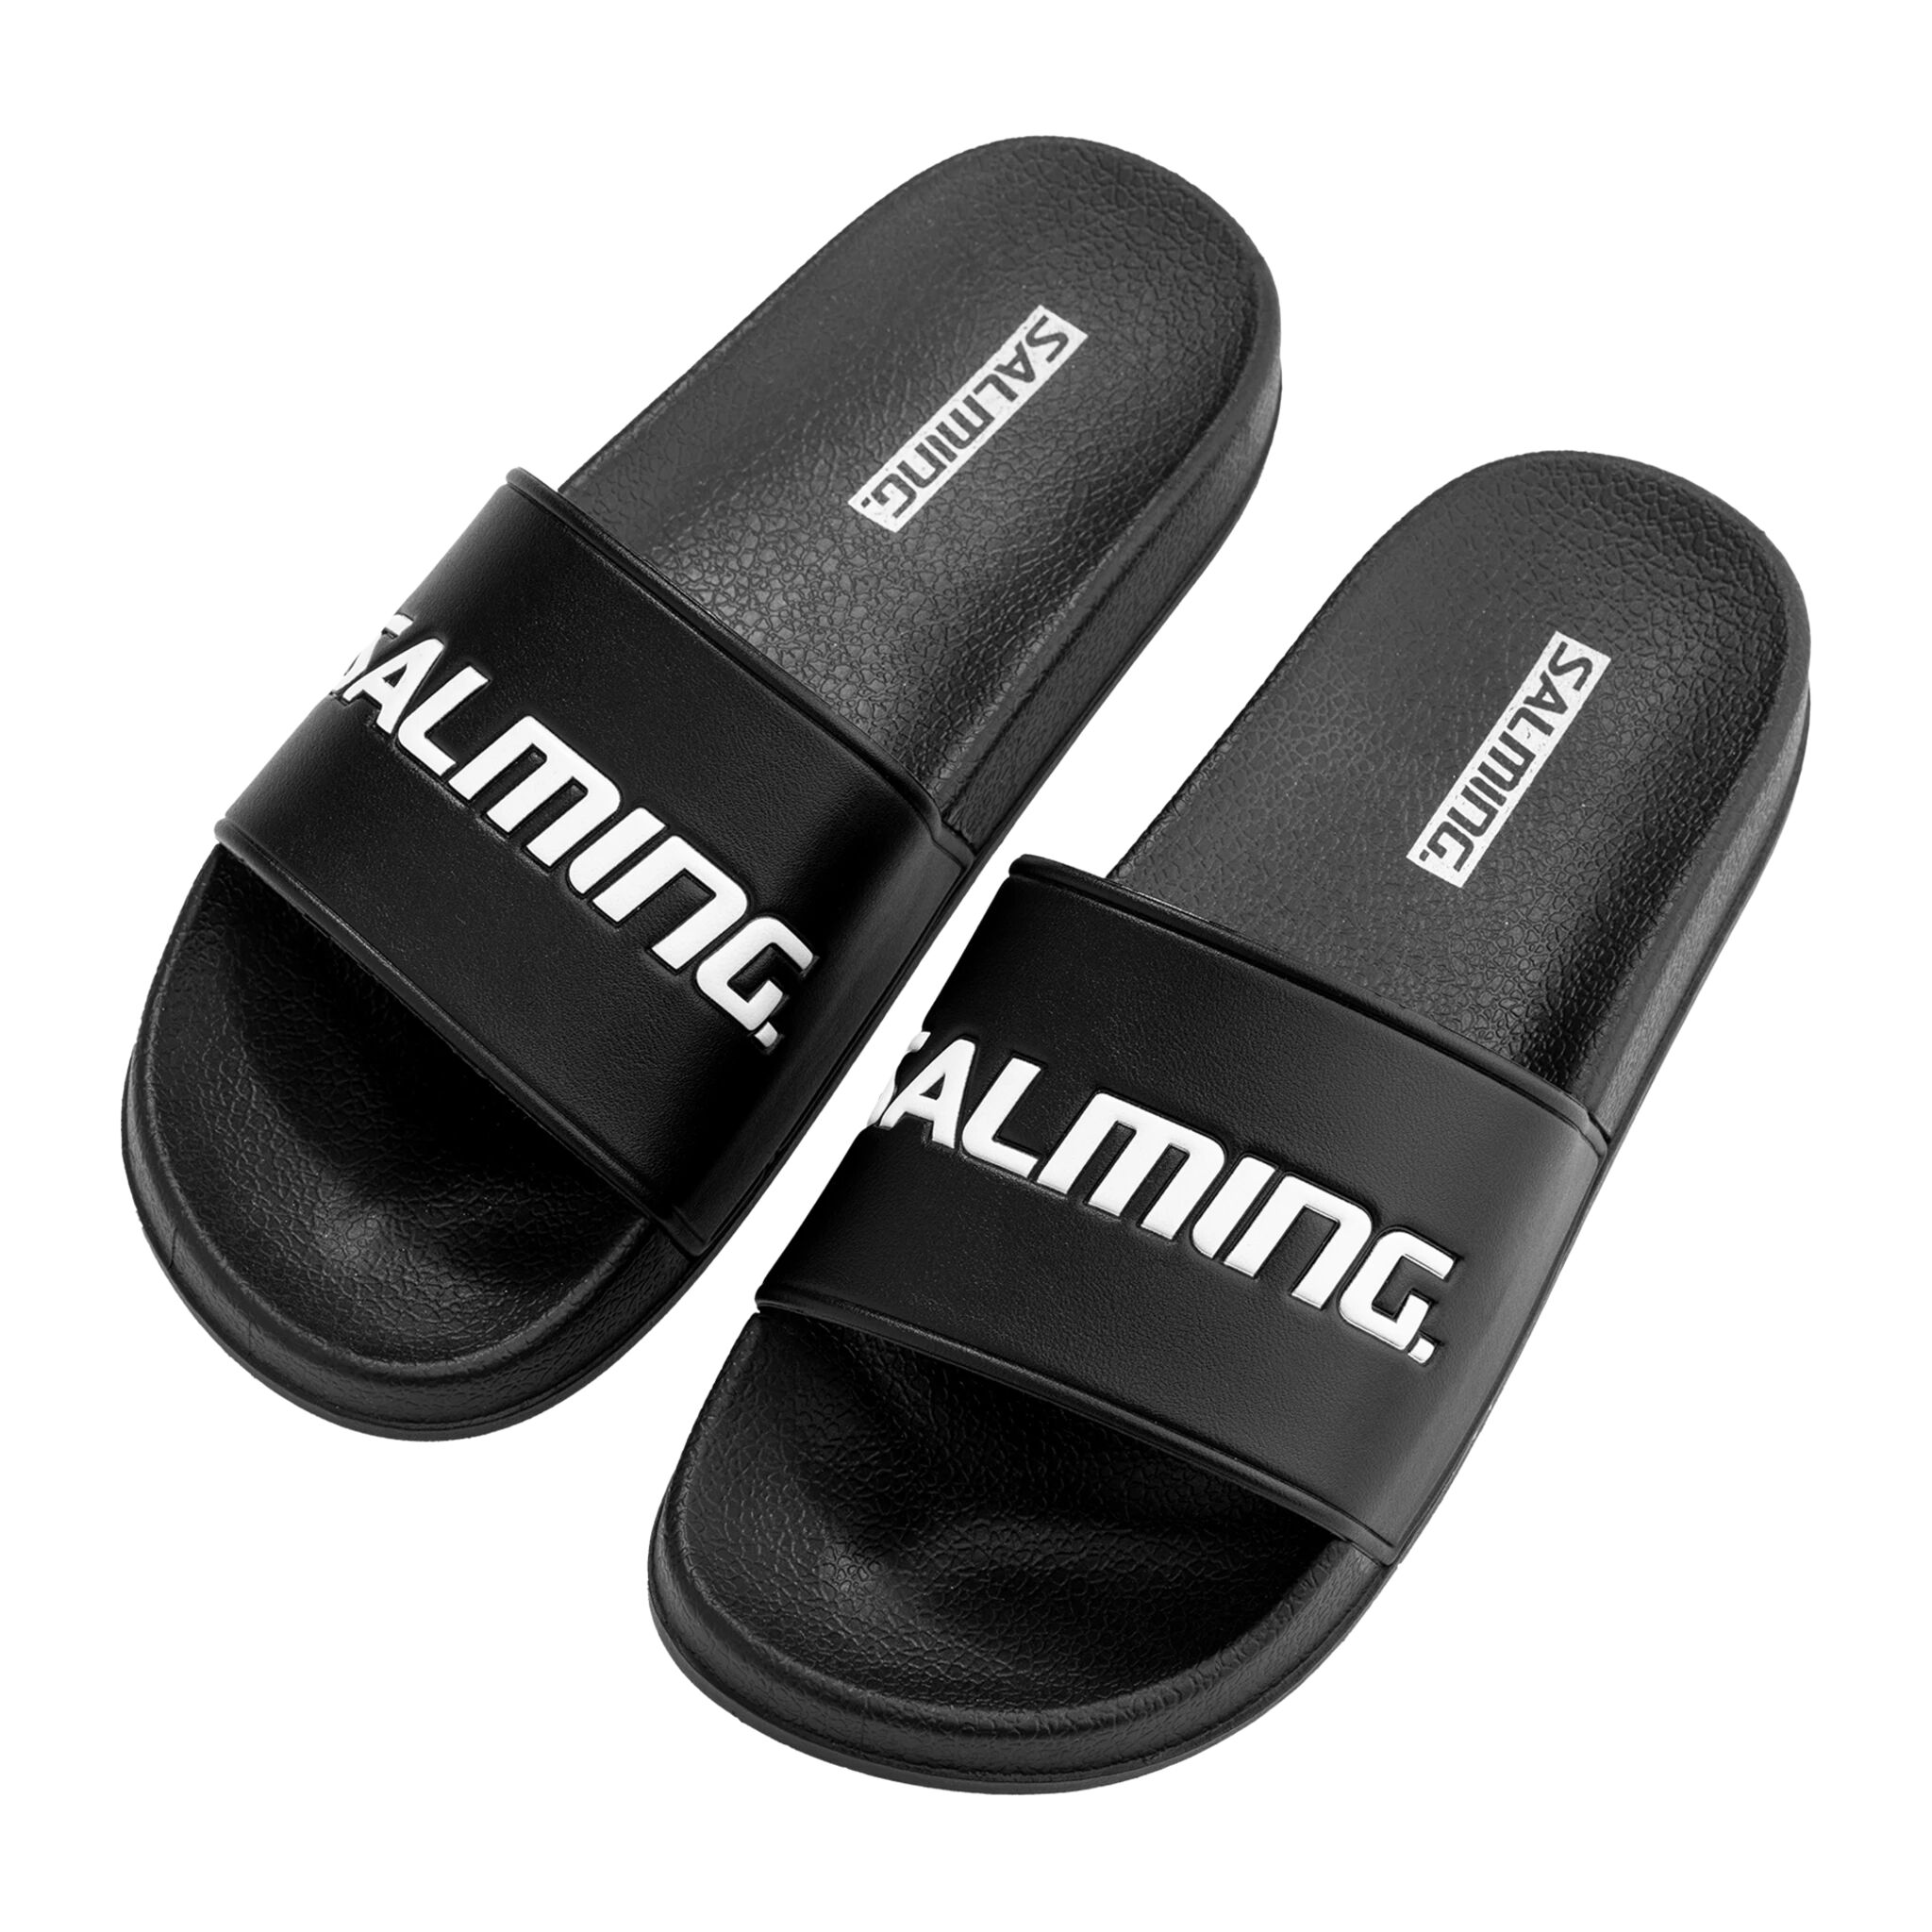 Salming Comfort Shower Sandal JR/SR-21/22, slippers 44/45 BLACK